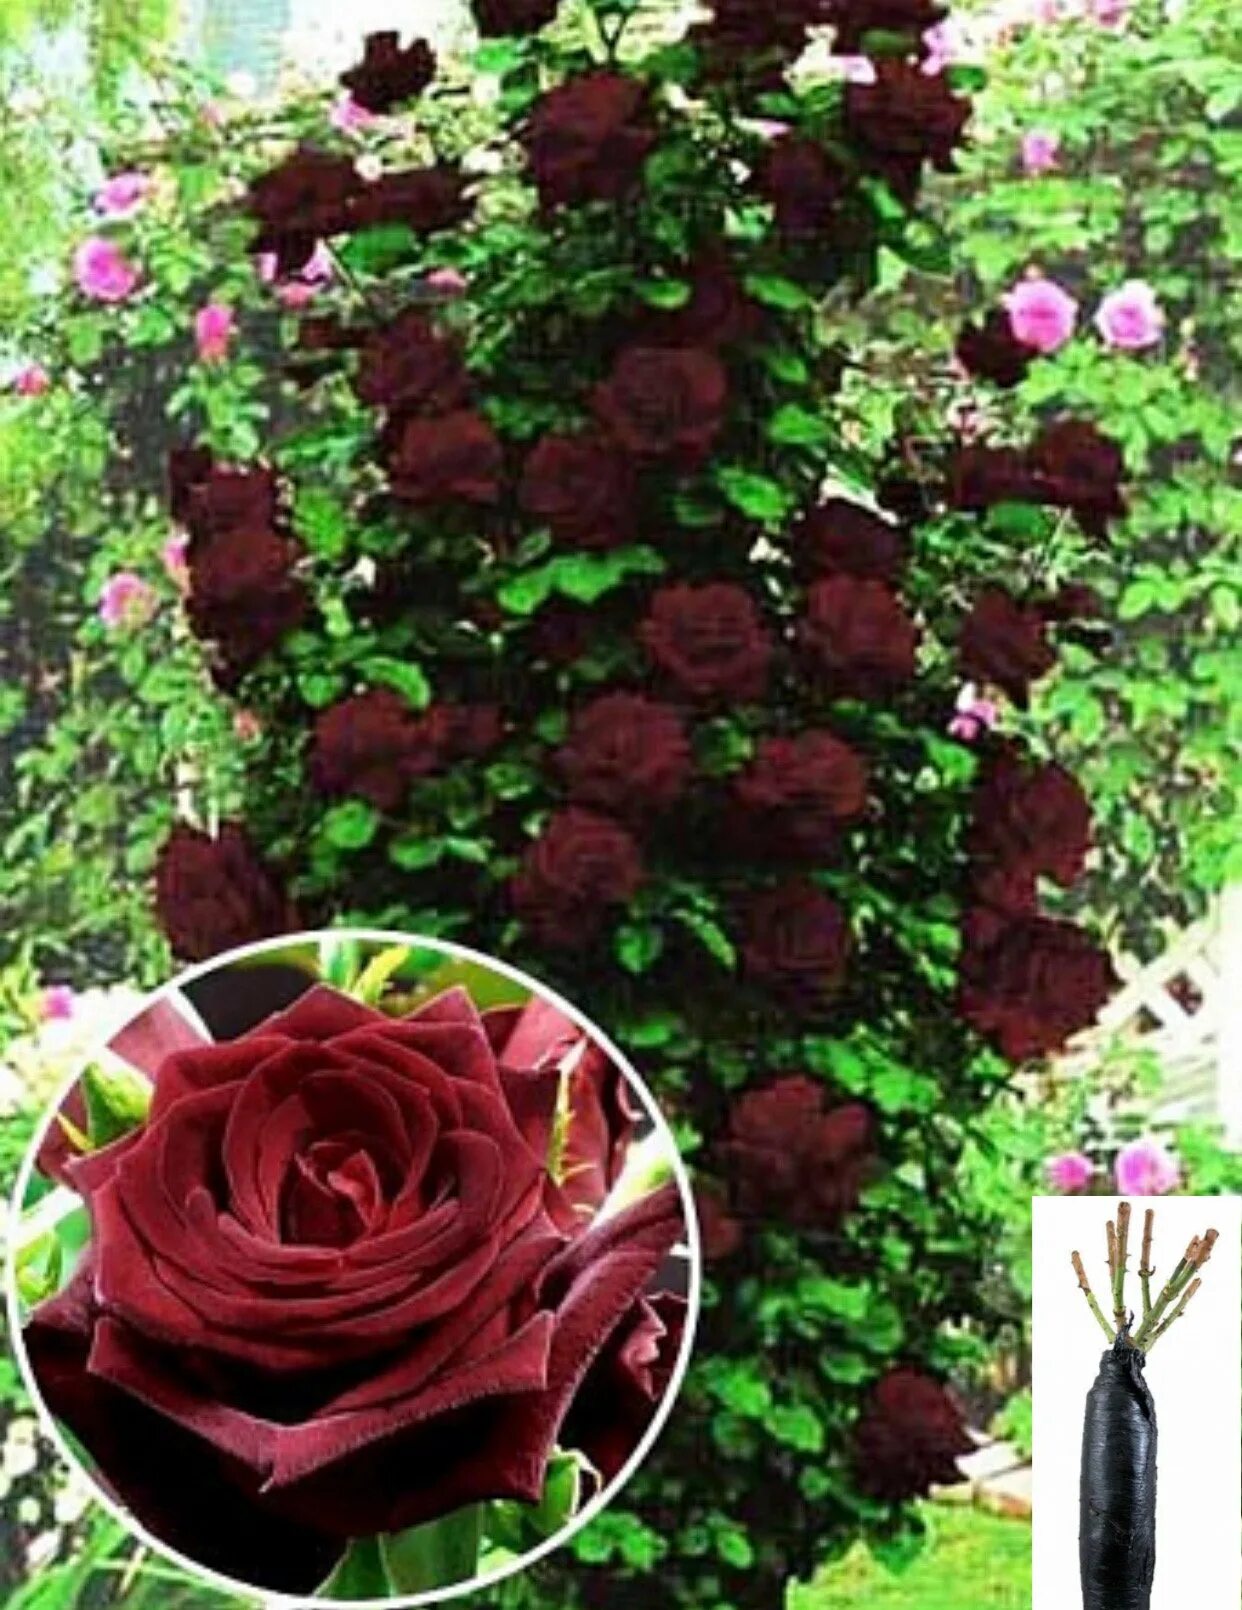 Букет плетистых роз